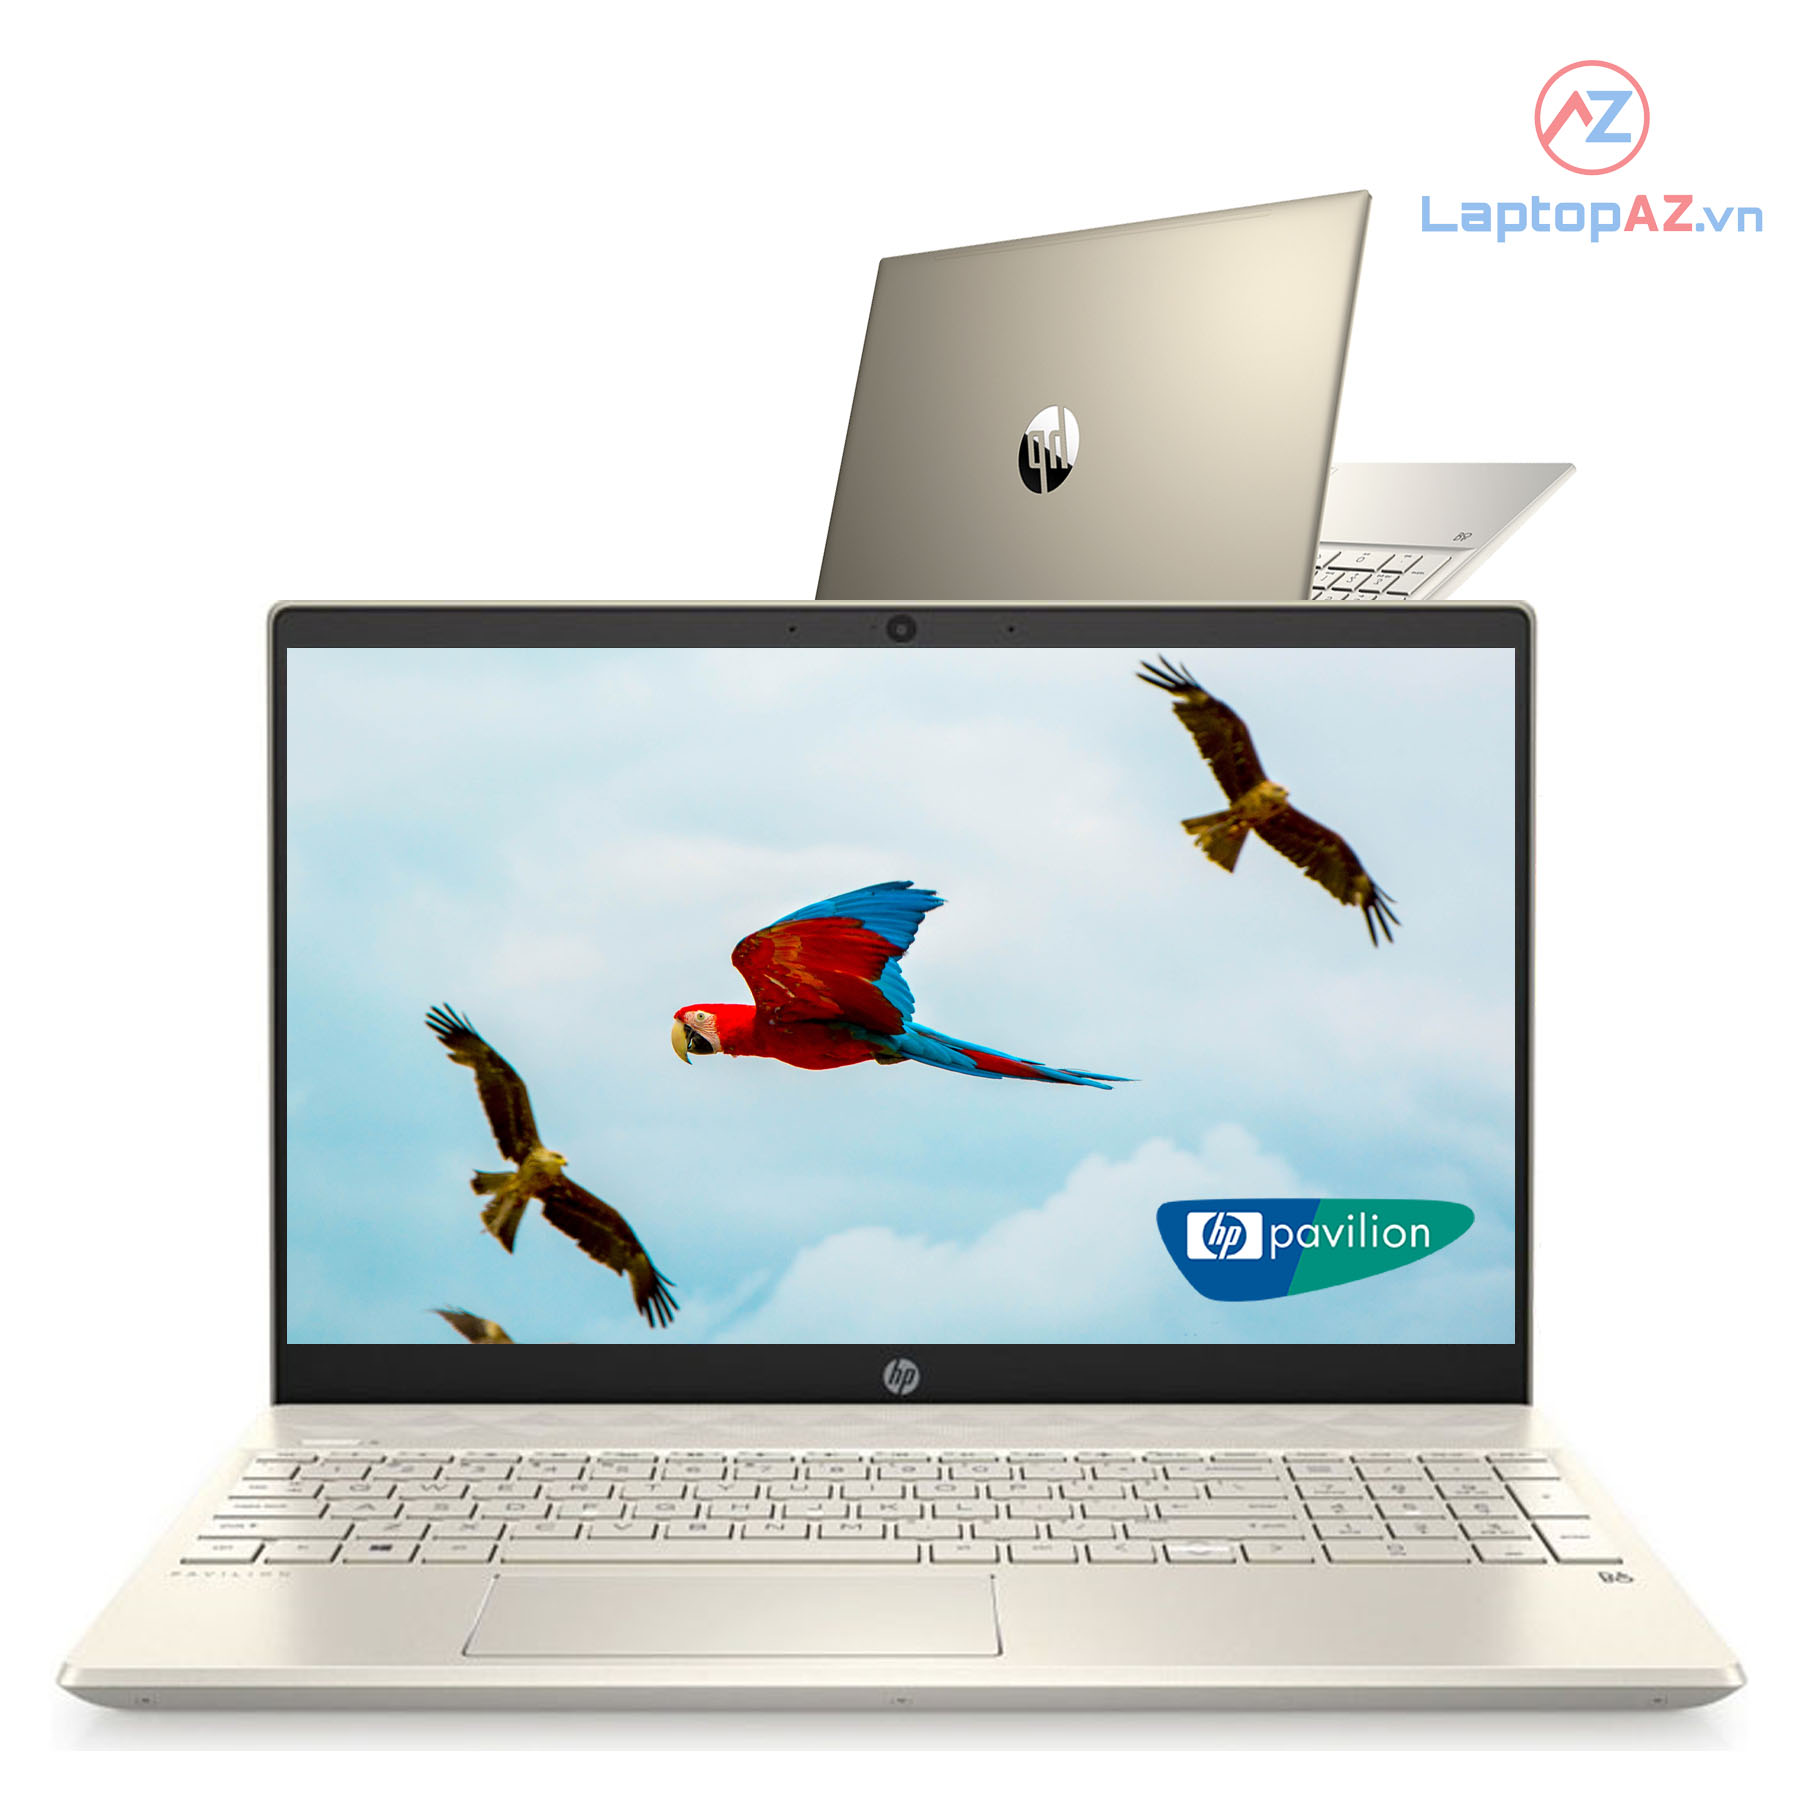 Laptop HP Pavilion 15 - eg0003TX 2D9C5PA Core i5 - 1135G7, 4GB, 256GB, GeForce MX450, 15.6 FHD IPS